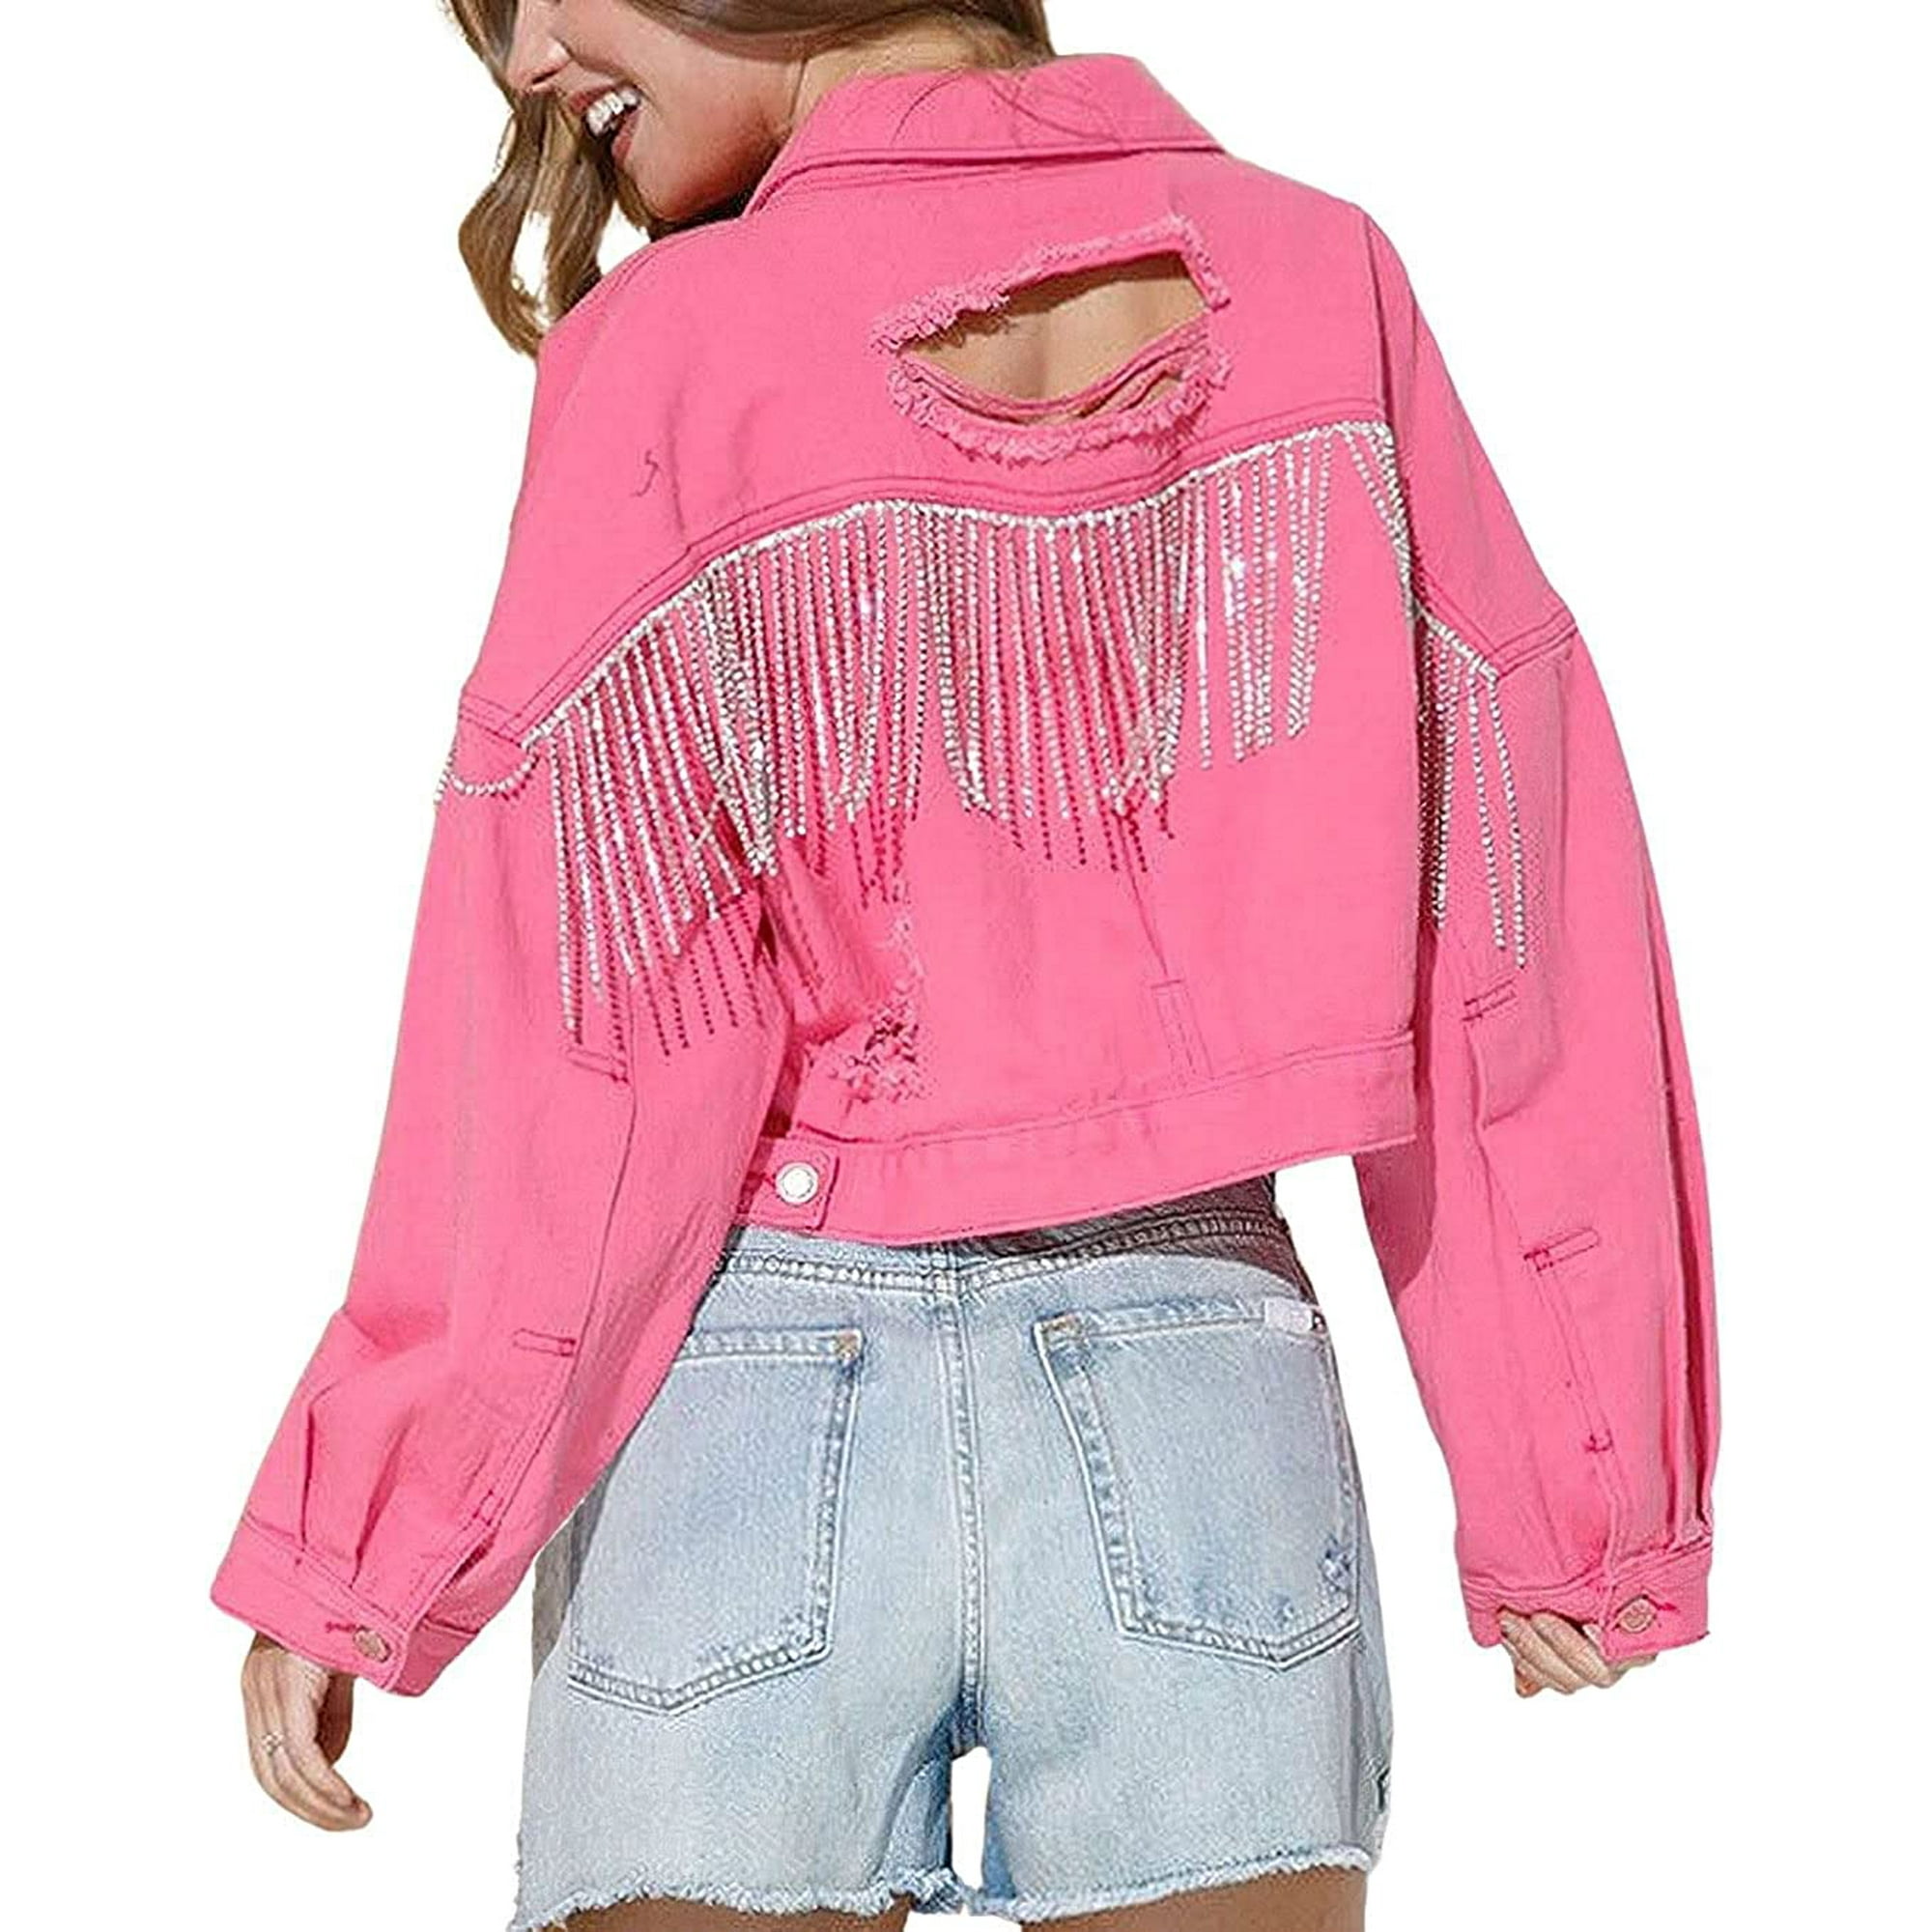 Rhinestone Fringe Denim Jacket in Pink